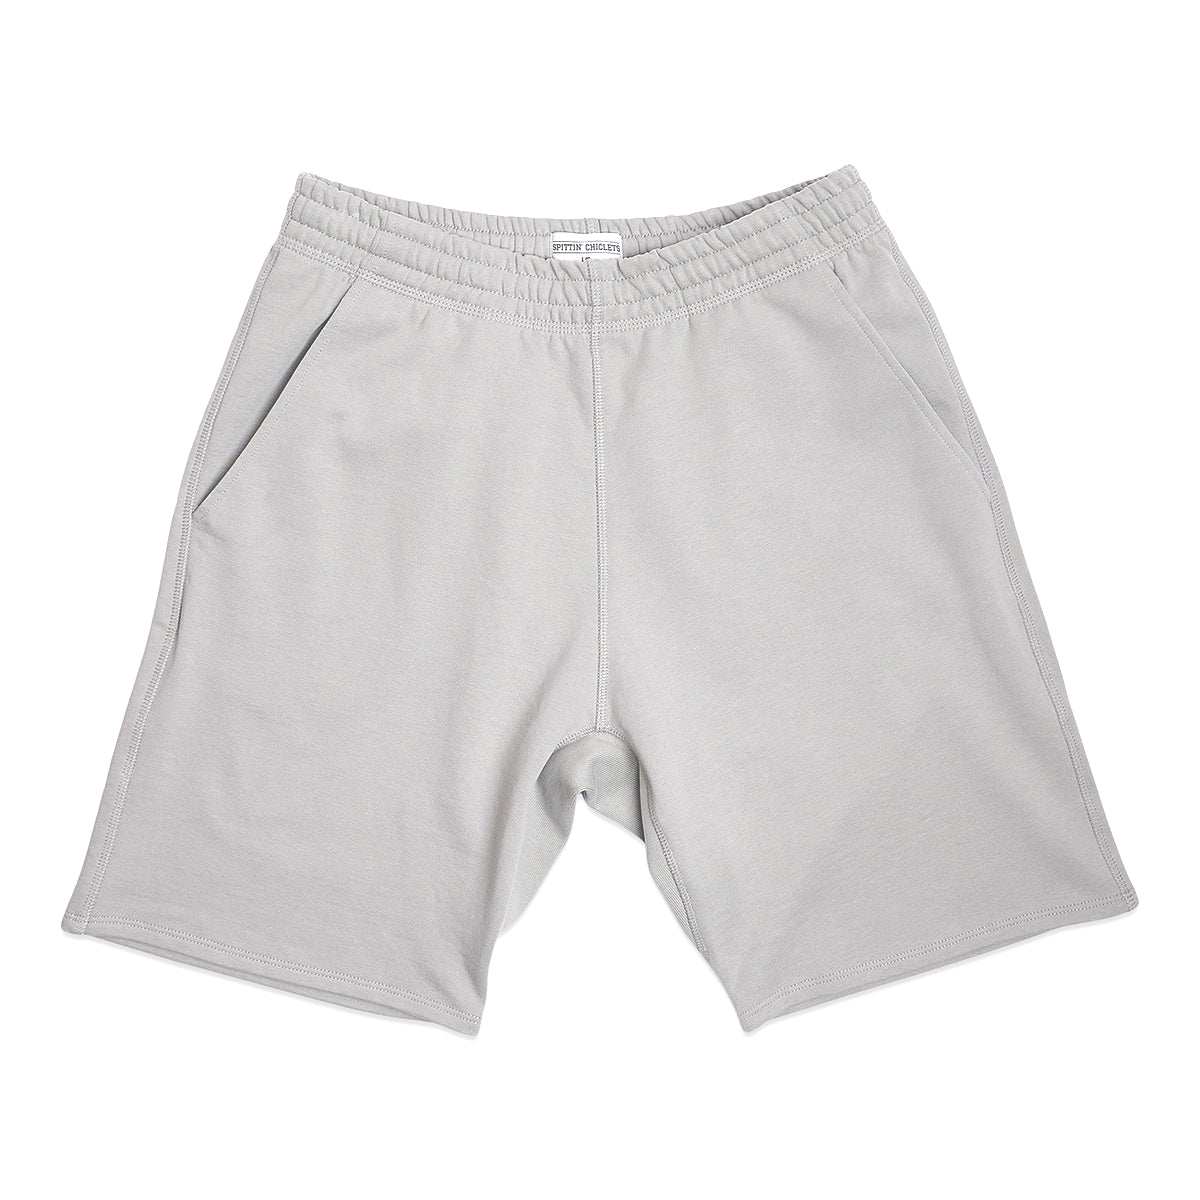 NBD Premium Collection Sweat Shorts-Shorts-Spittin Chiclets-Barstool Sports